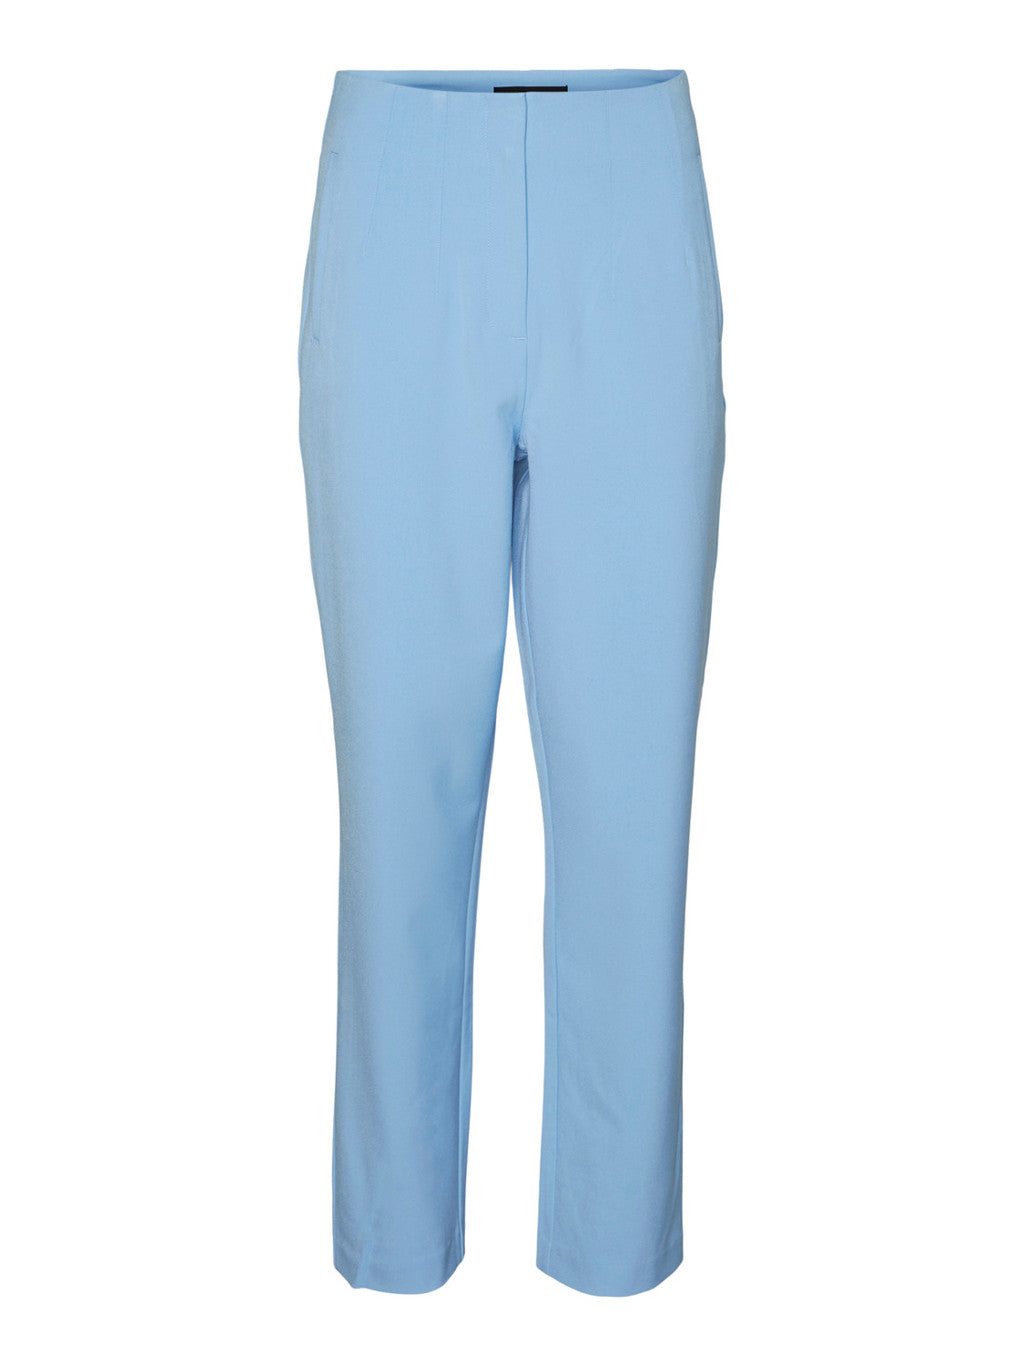 Kiraloa Blue High Waist Tapered Trousers